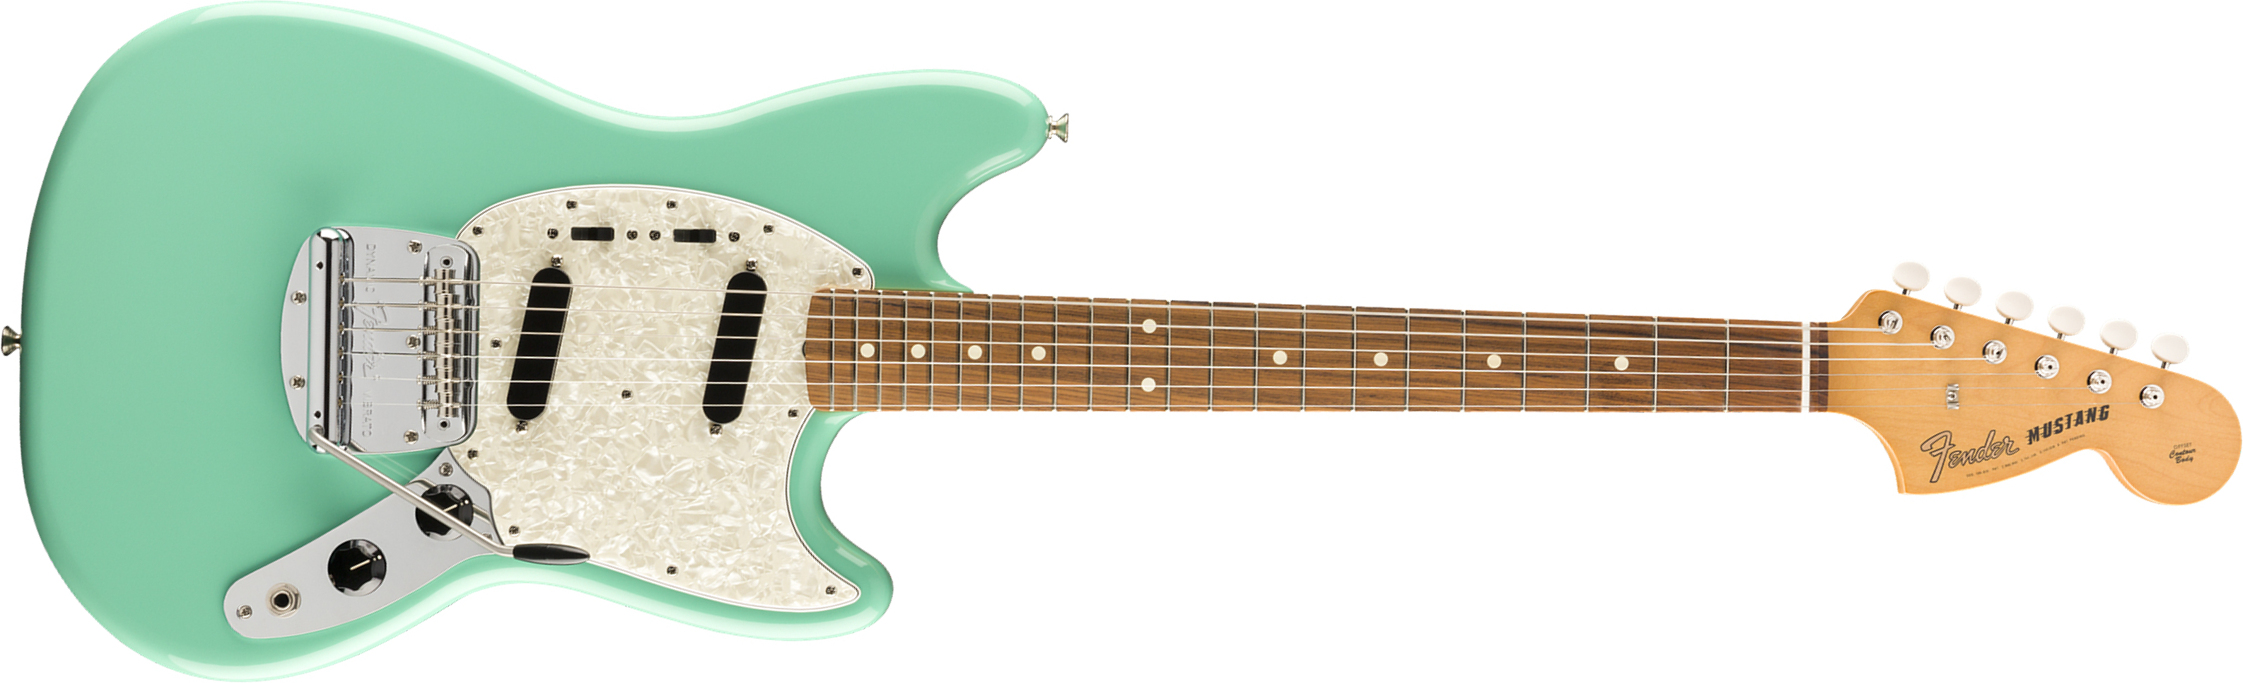 Fender Mustang 60s Vintera Vintage Mex Pf - Seafoam Green - Retro rock electric guitar - Main picture